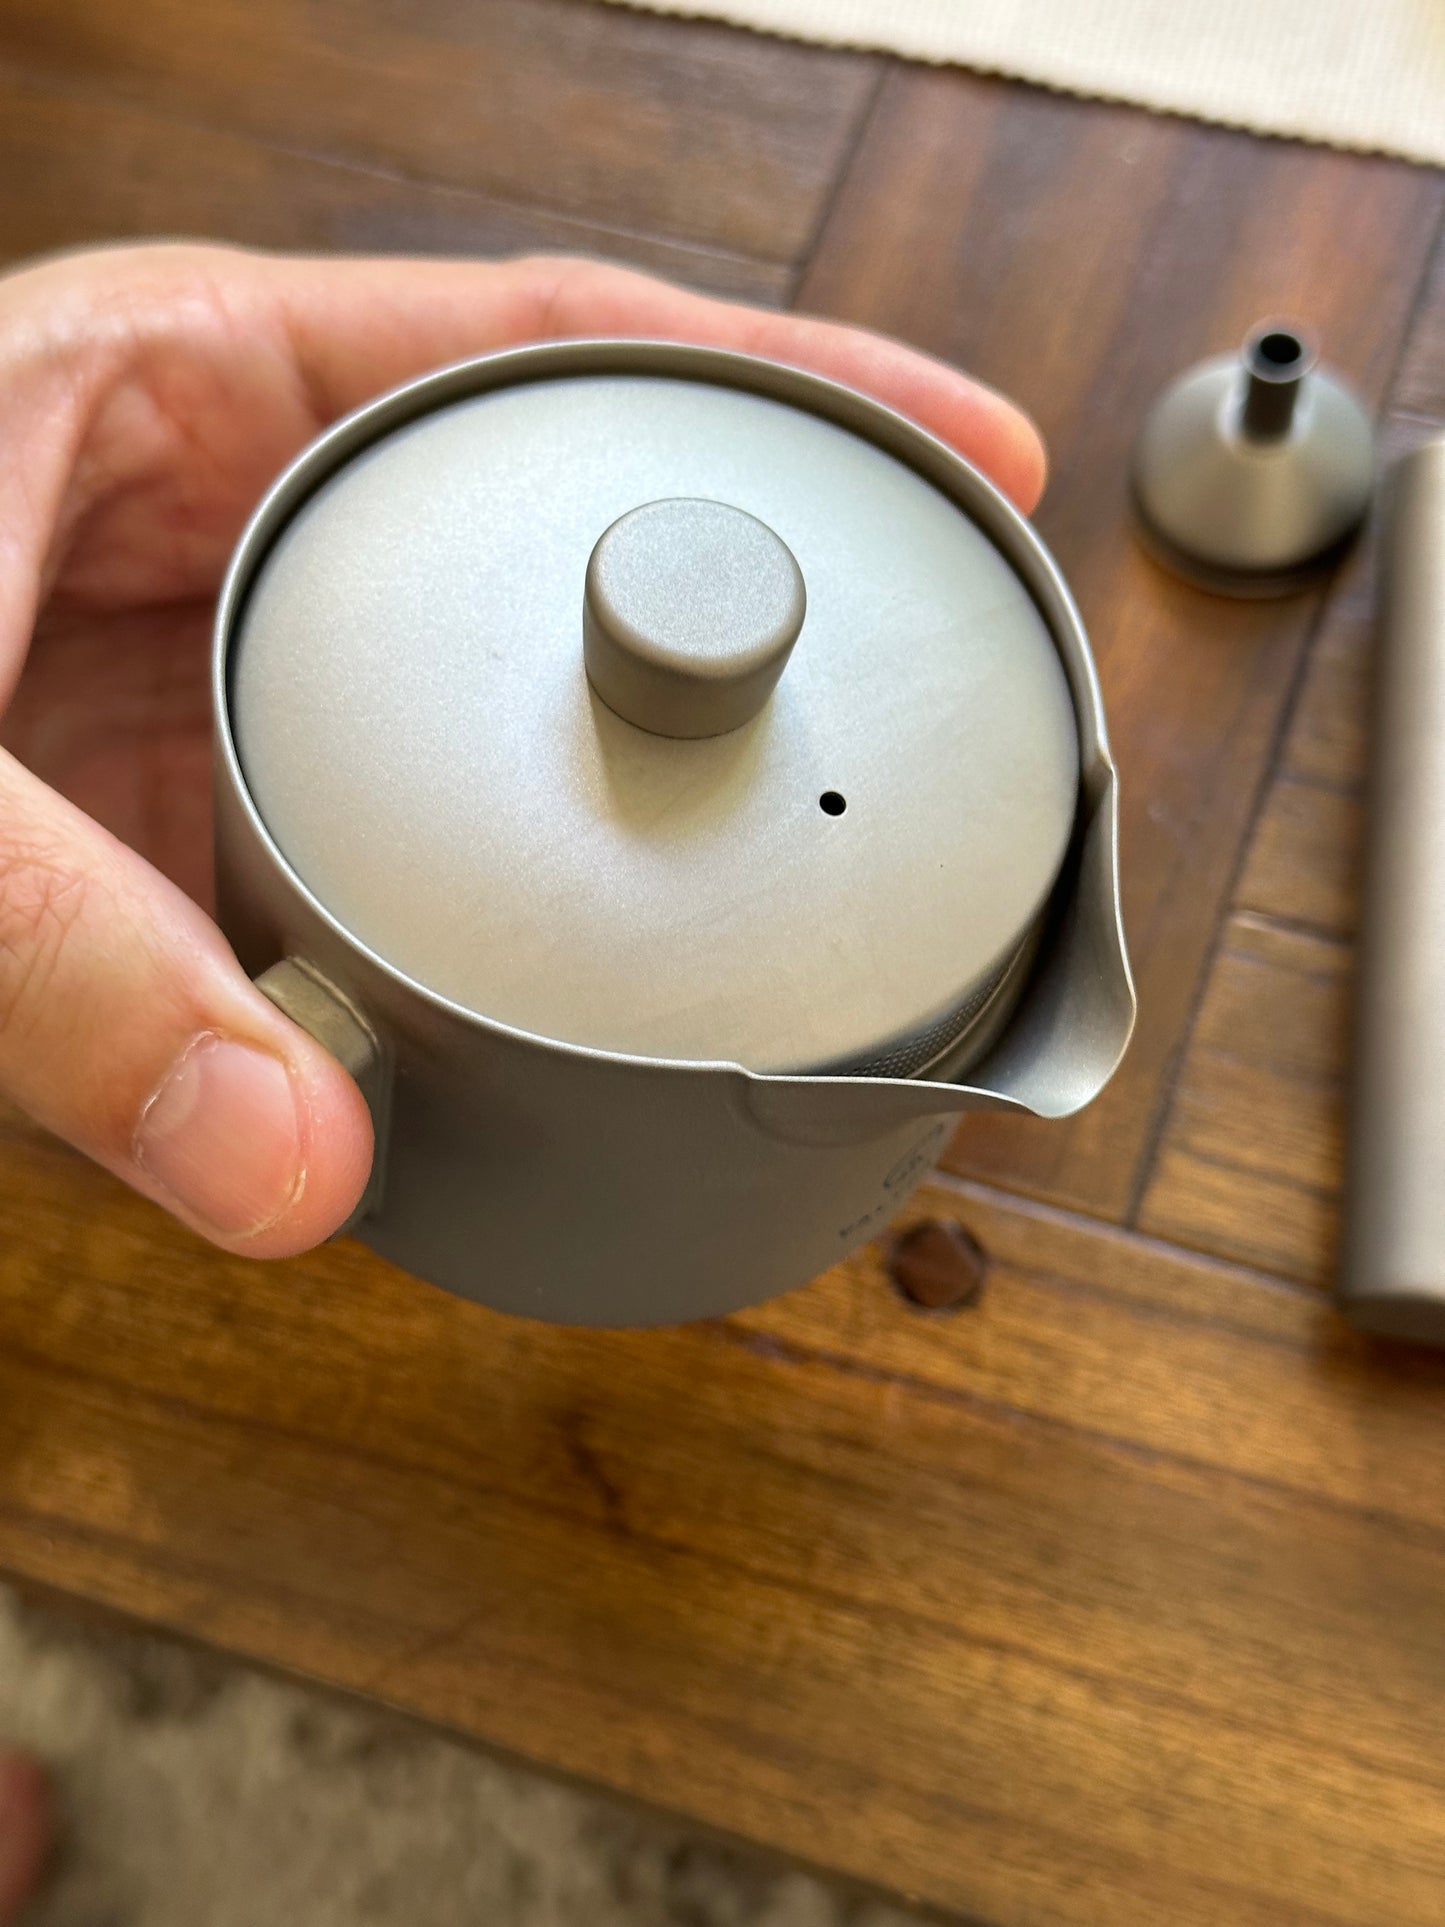 Valtcan Titanium Gaiwan Double Wall Teapot Single Serve Brew Tea Puer Leaves 98g